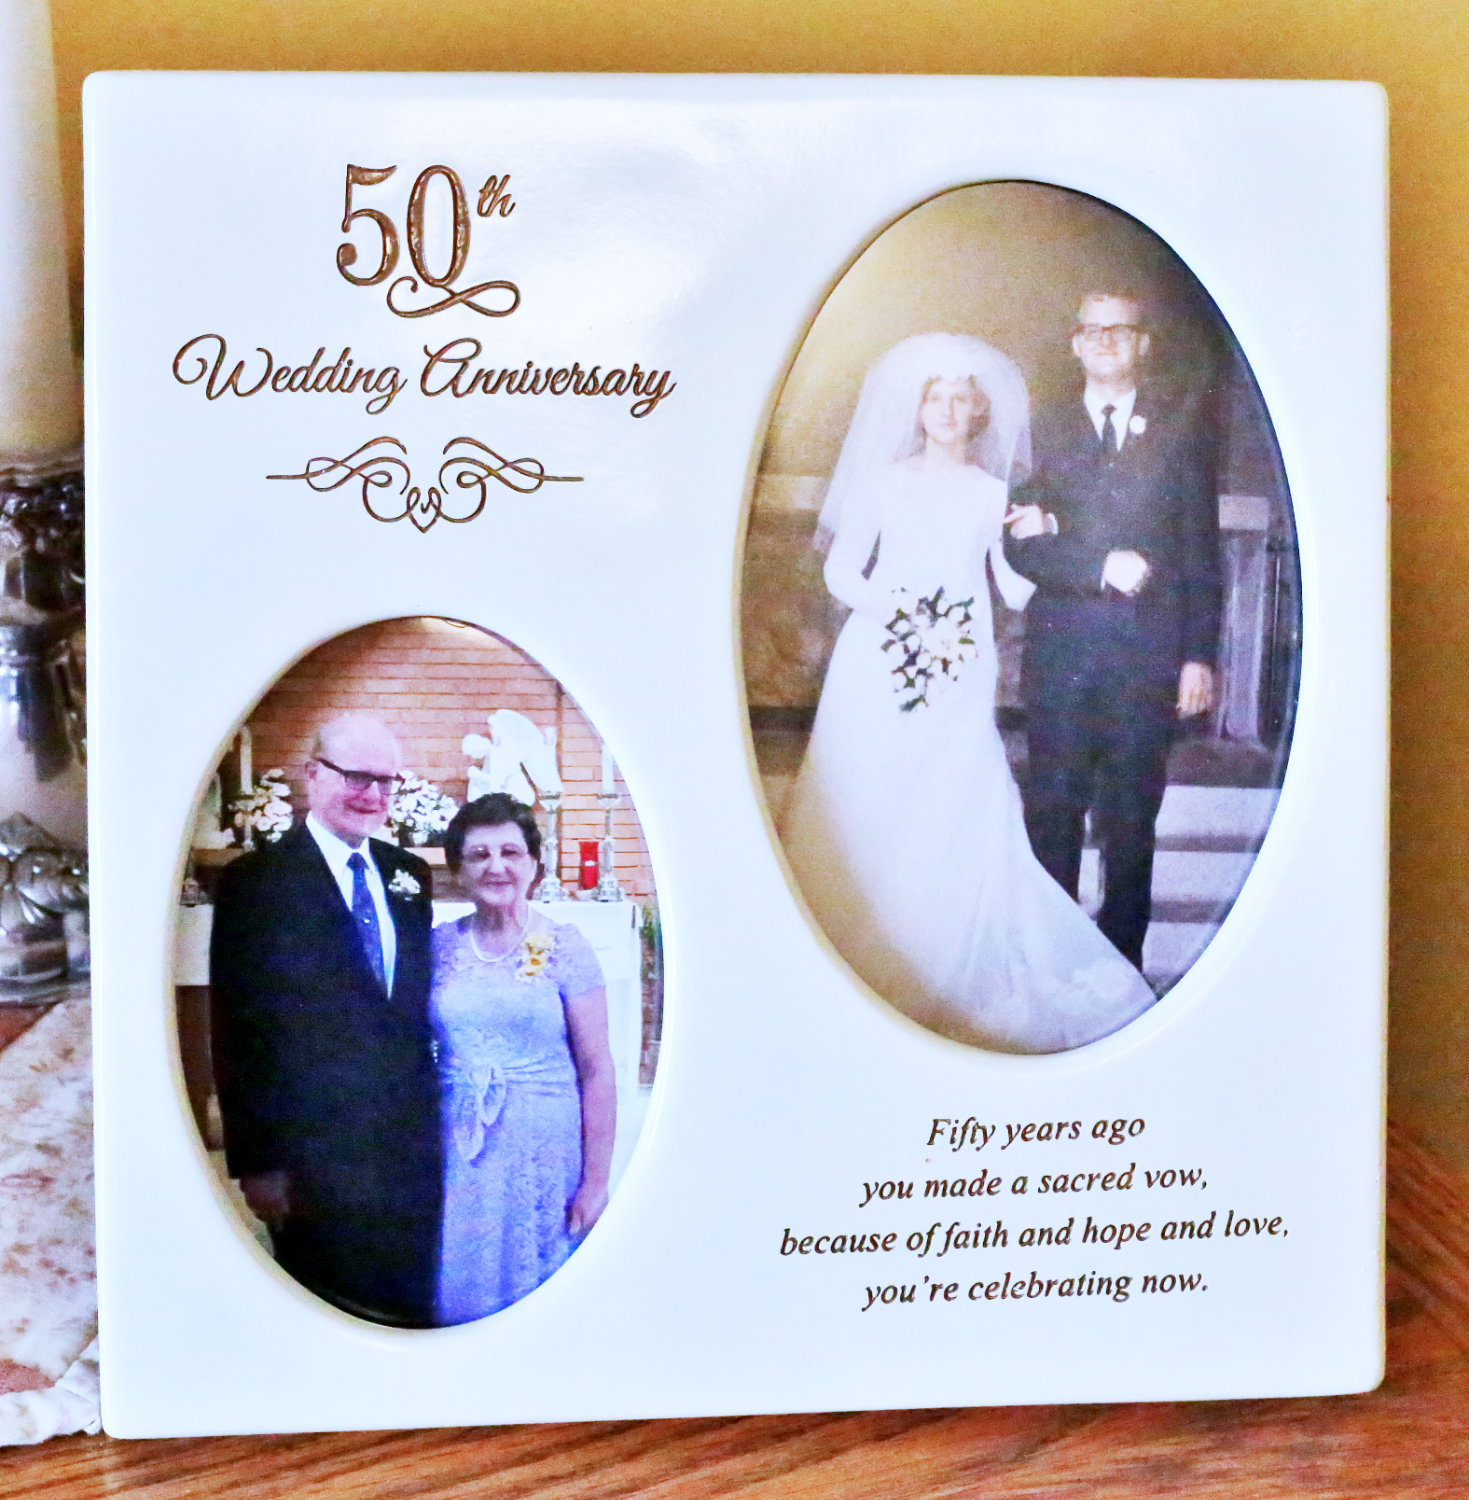 Memorabilia of their 50th wedding anniversary.